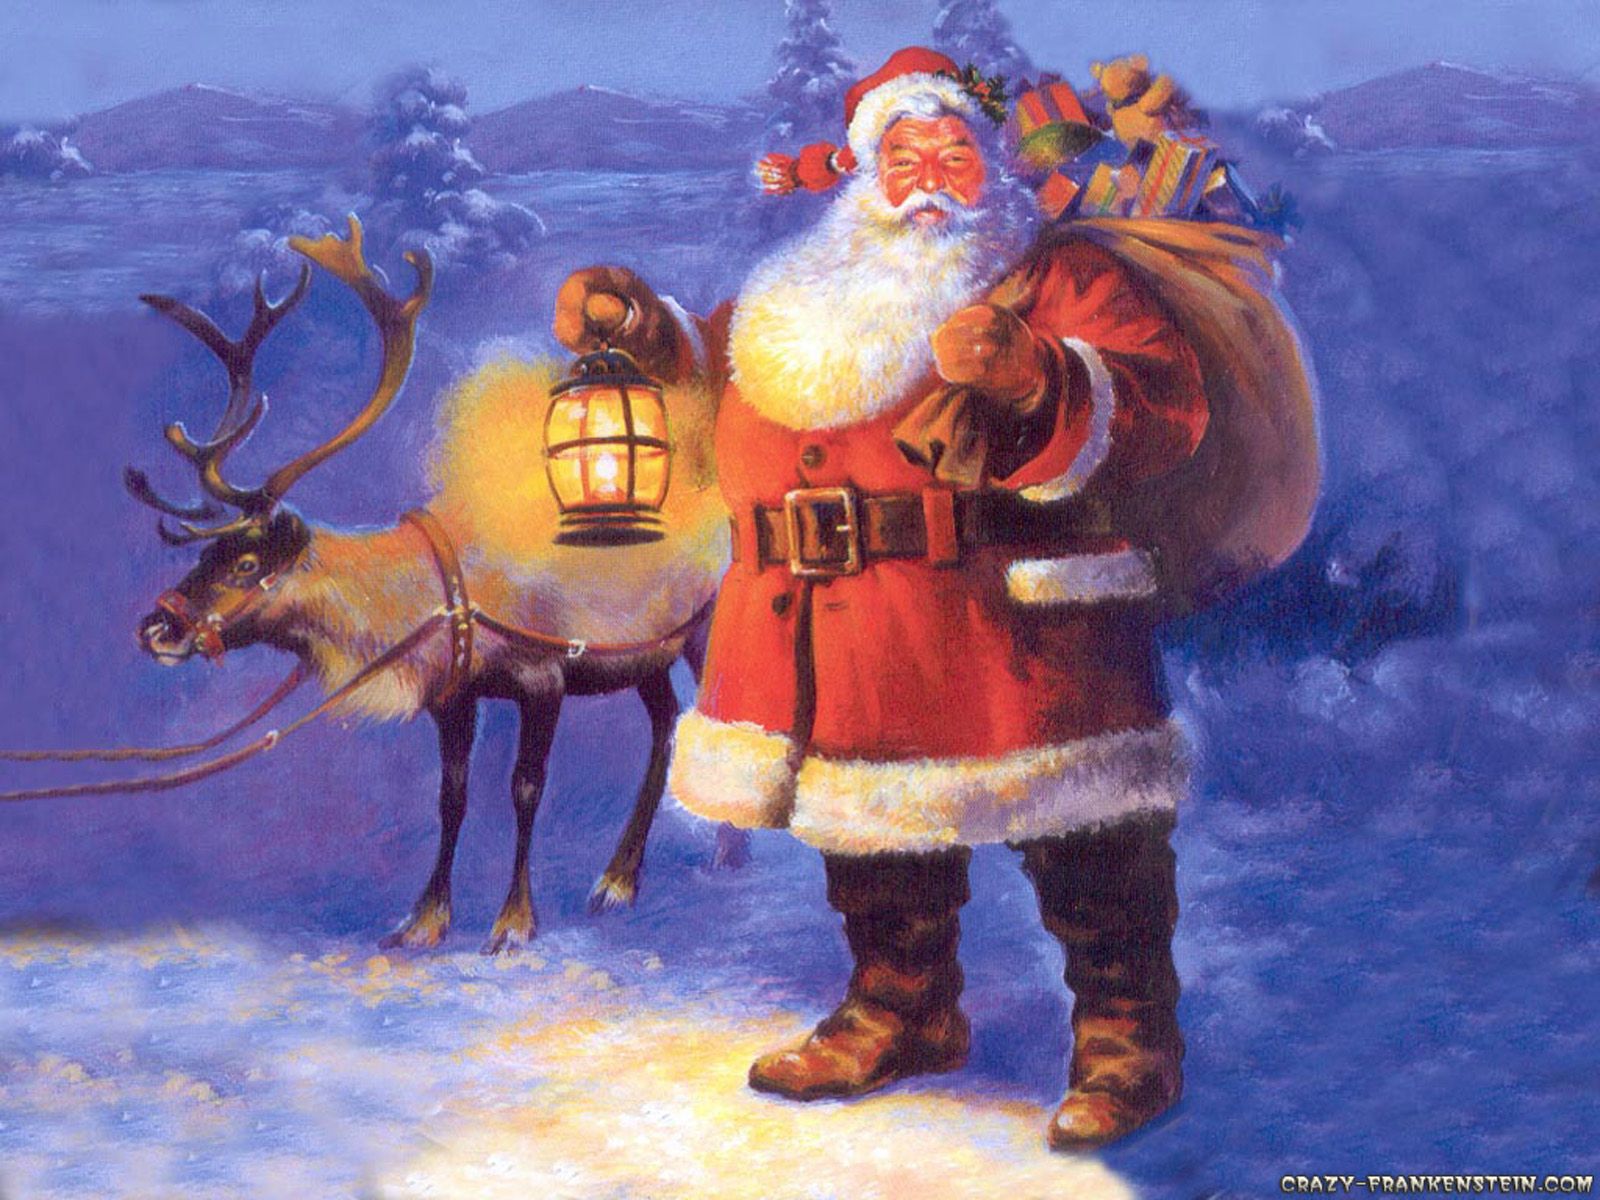 151554 Santa Wallpaper Images Stock Photos  Vectors  Shutterstock